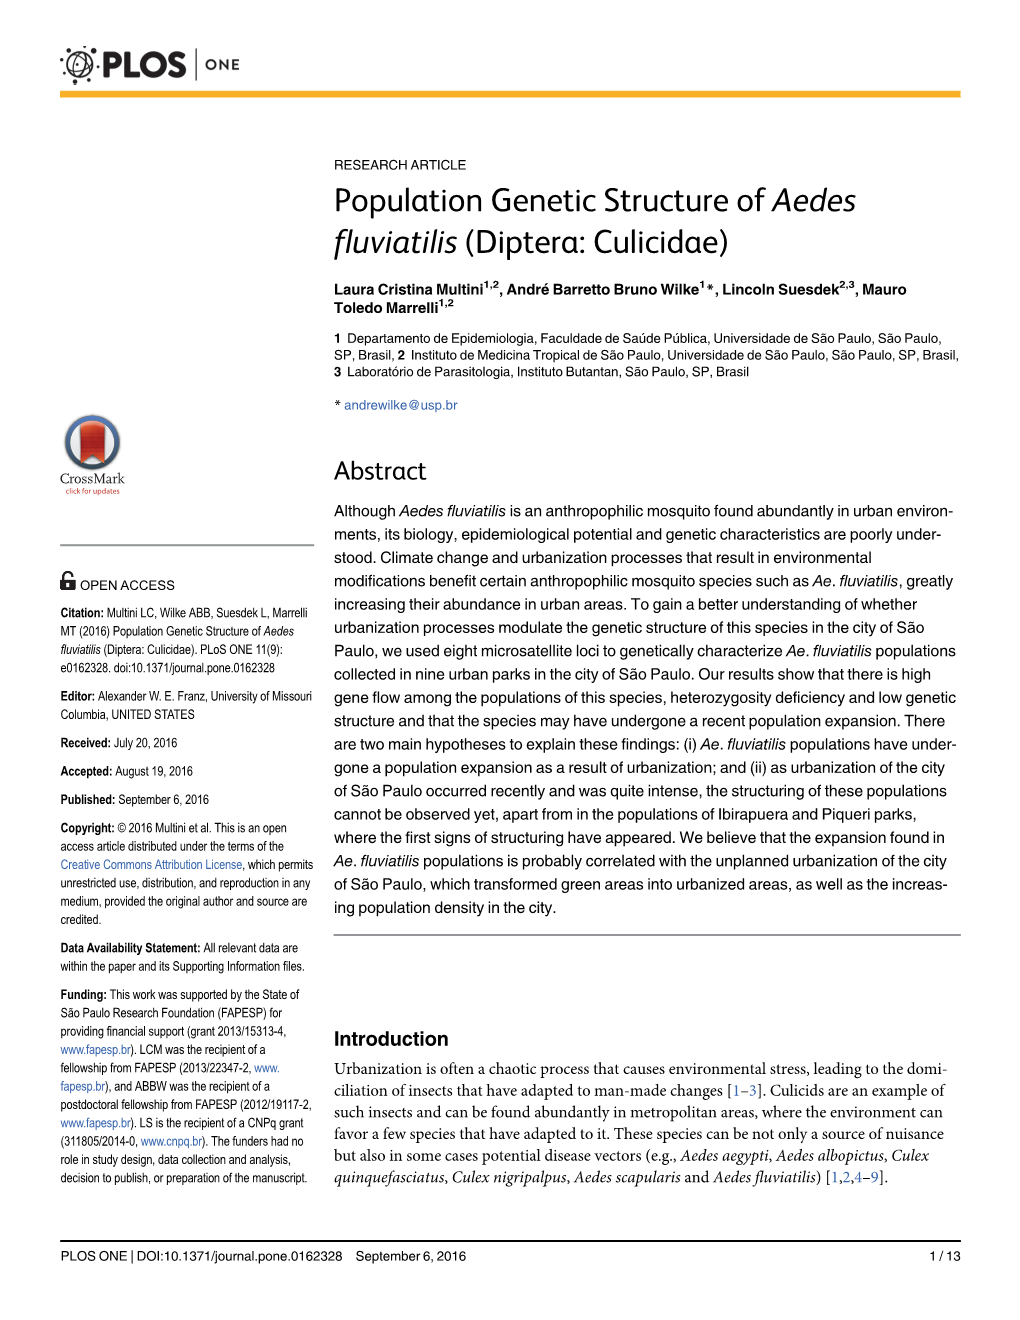 Population Genetic Structure of Aedes Fluviatilis (Diptera: Culicidae)